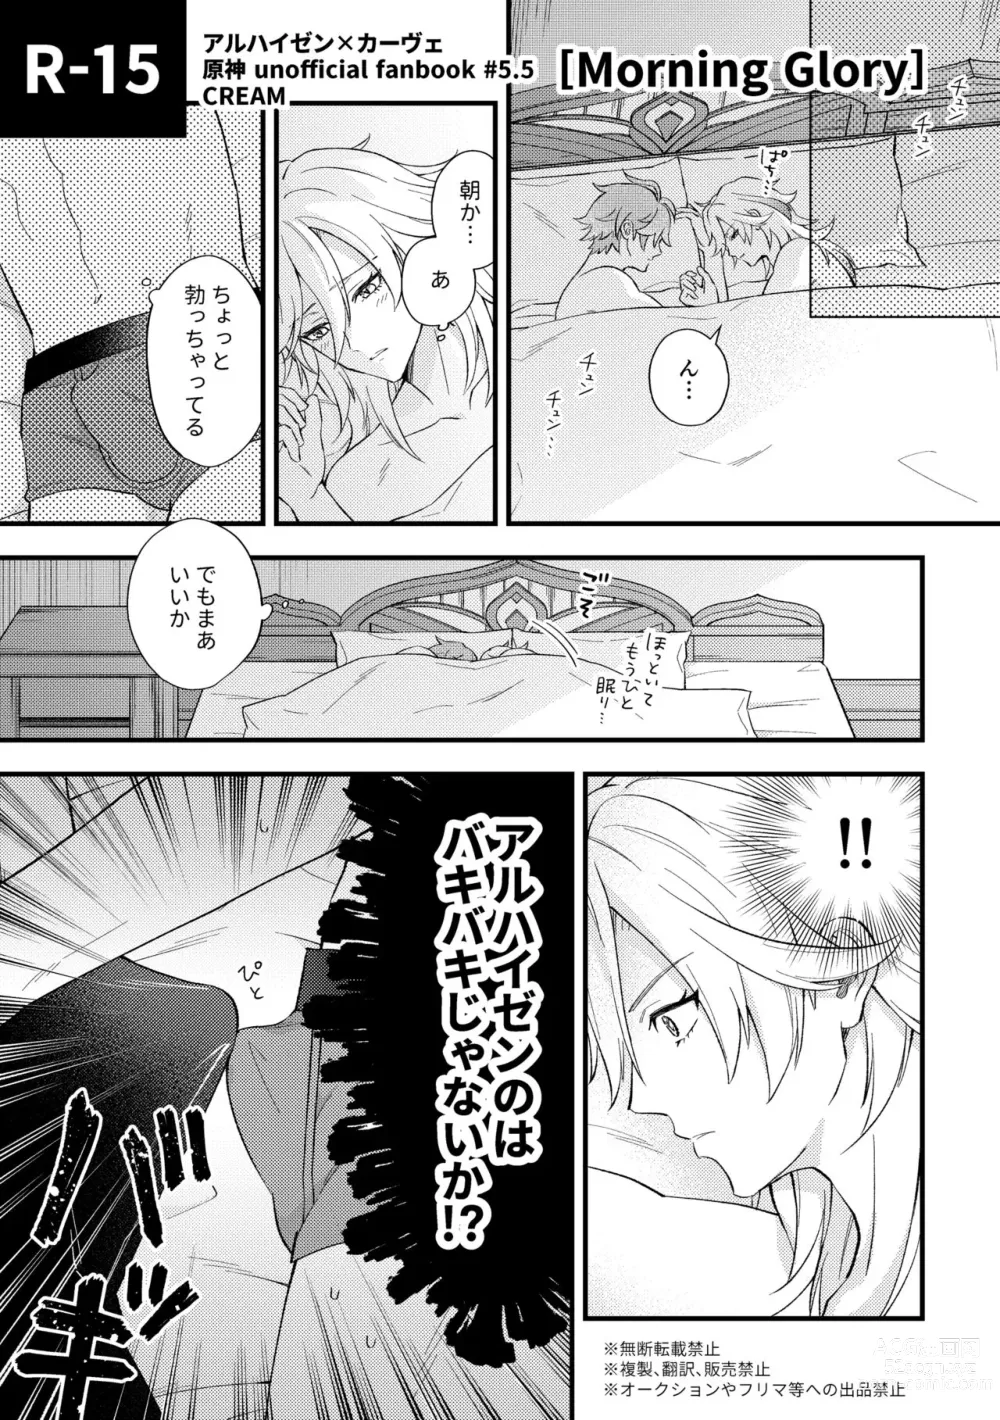 Page 1 of doujinshi Morning Glory